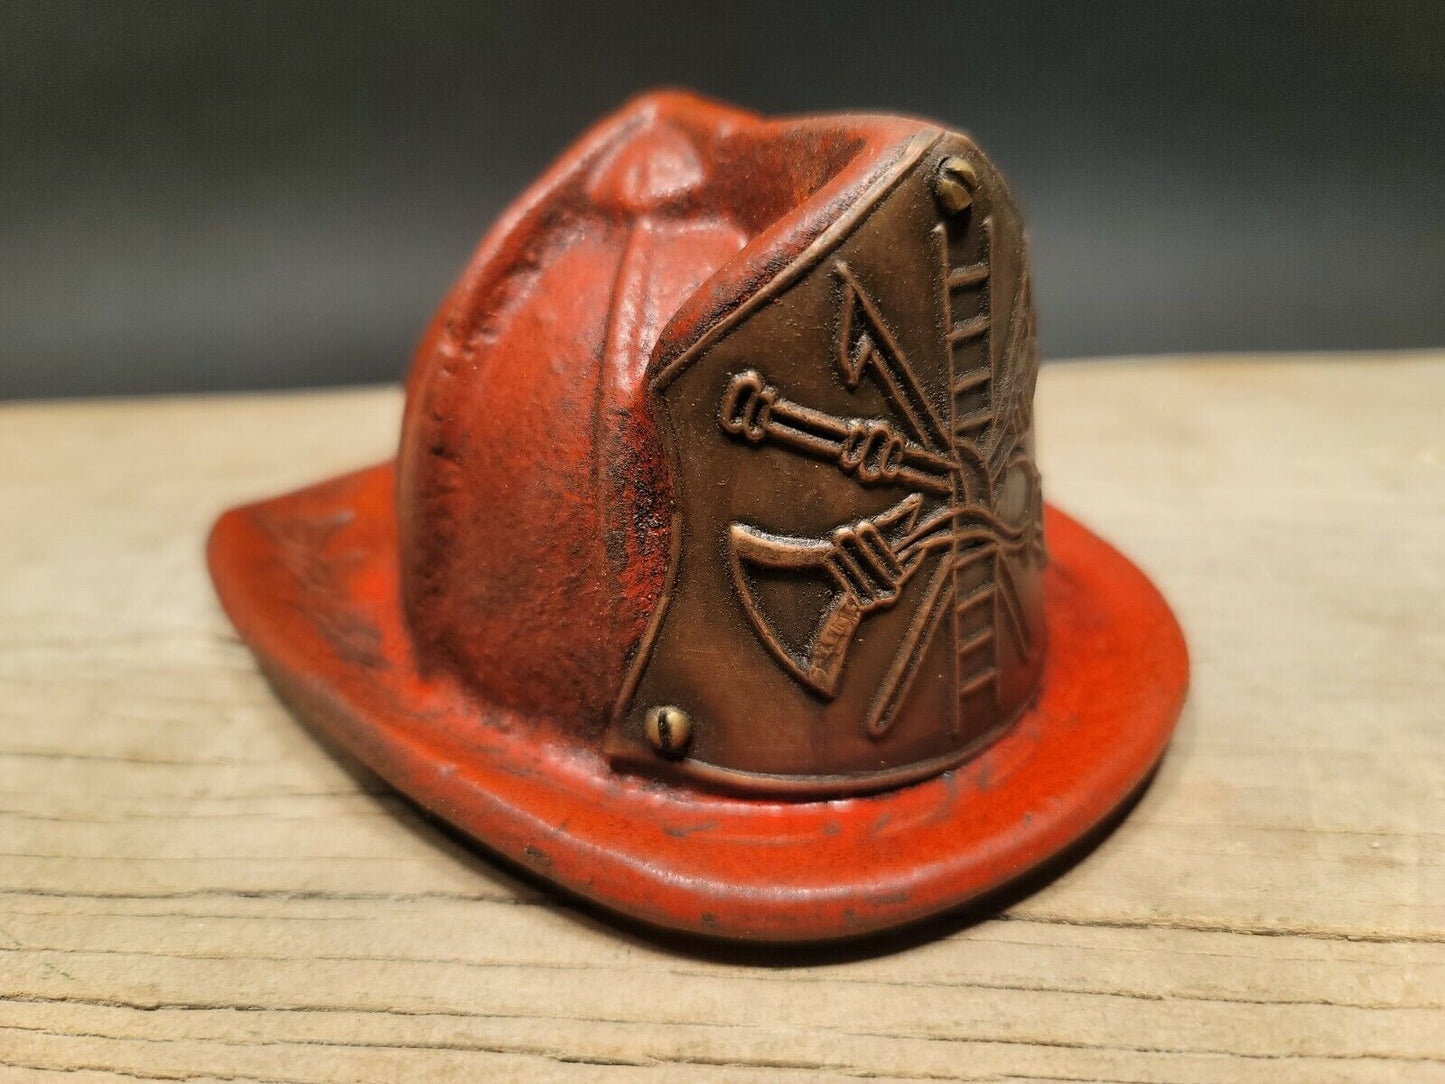 Antique Vintage Style Miniature Cast Iron Fireman Helmet Coin Bank